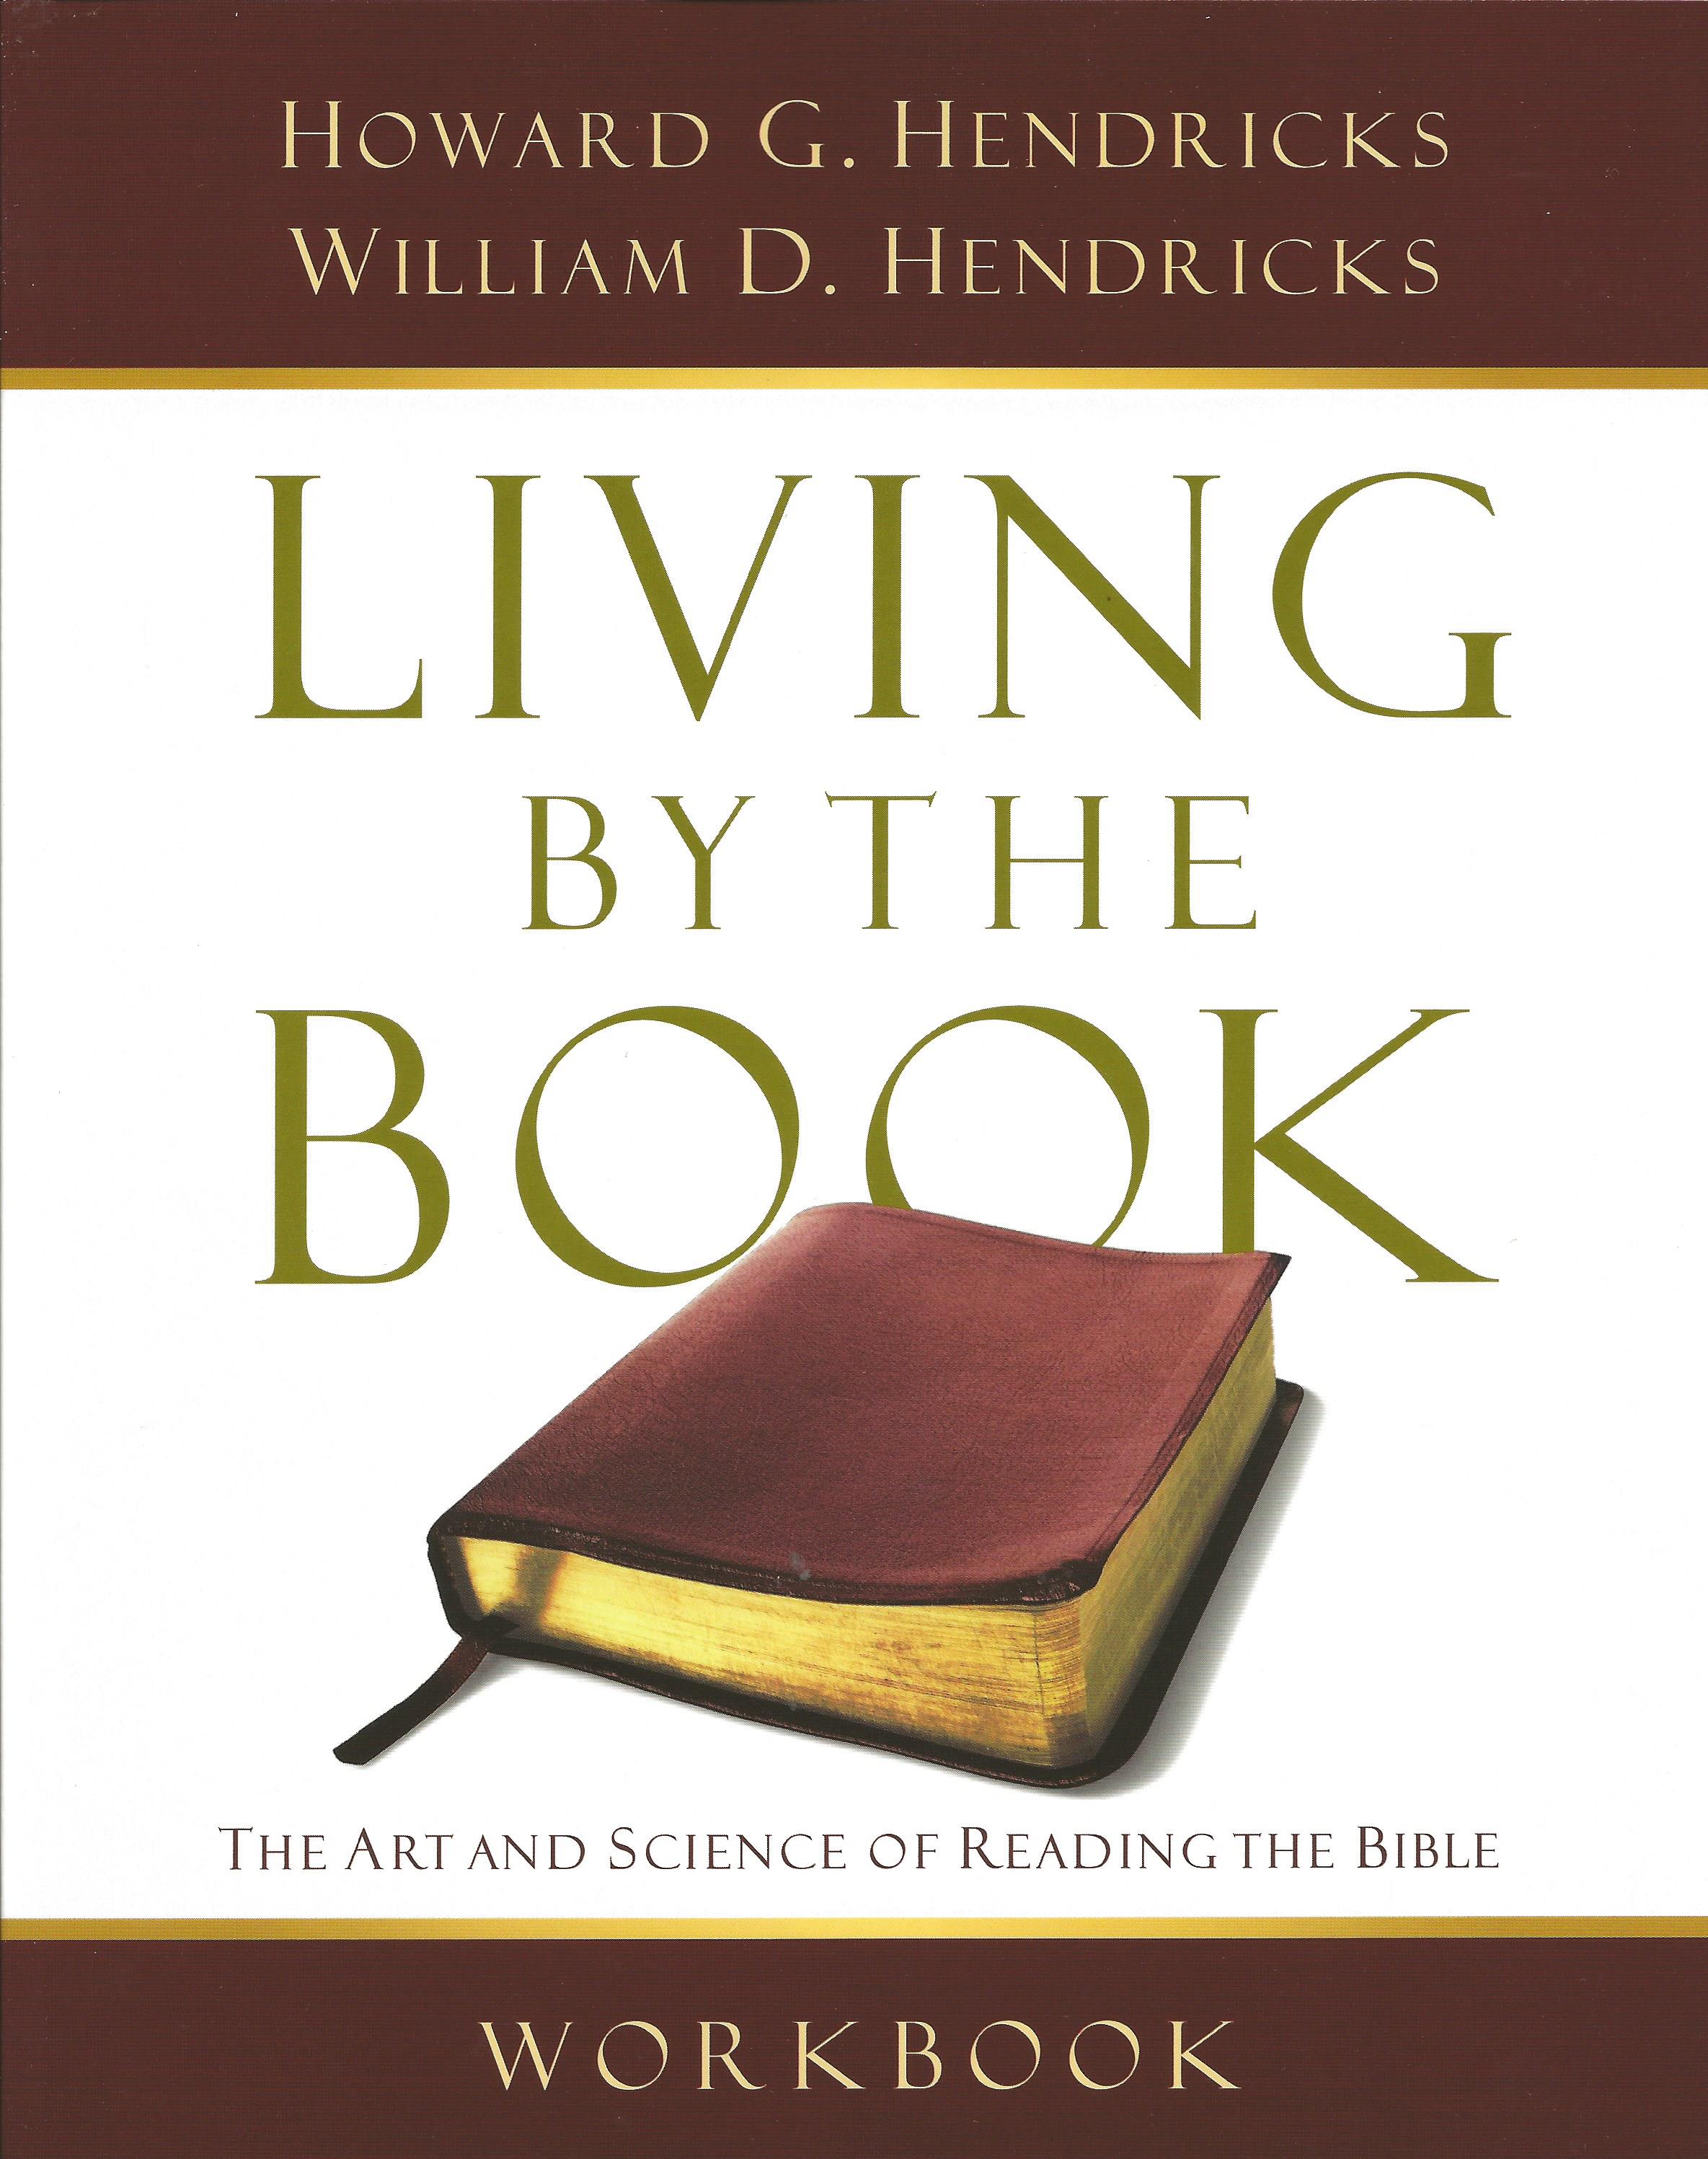 LIVING BY THE BOOK Howard Hendricks & William Hendricks